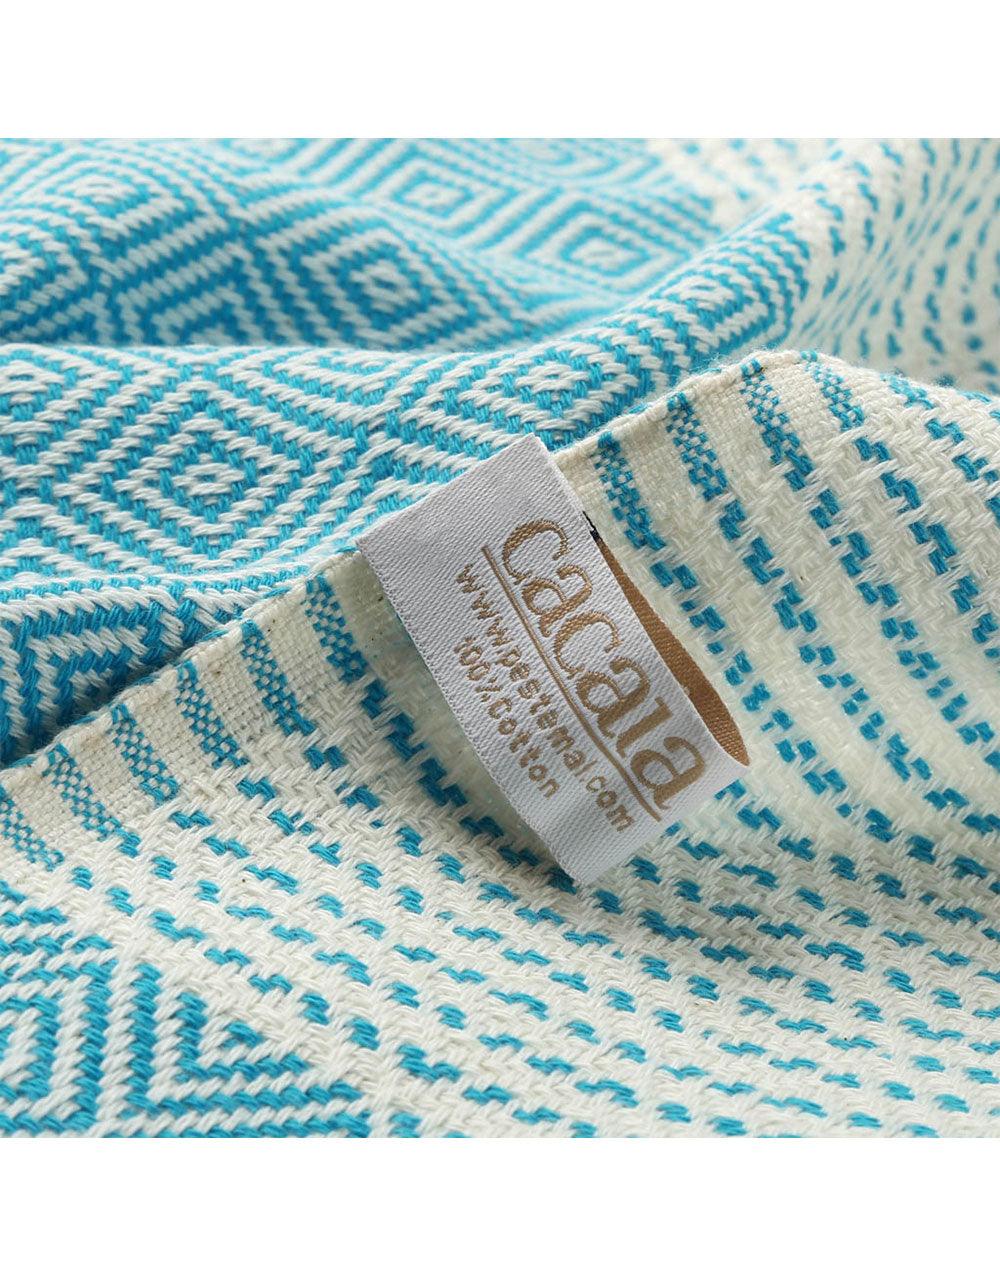 Cacala Turkish Towel Satranc Peshtemal 39"x71" 100% Cotton - Cacala